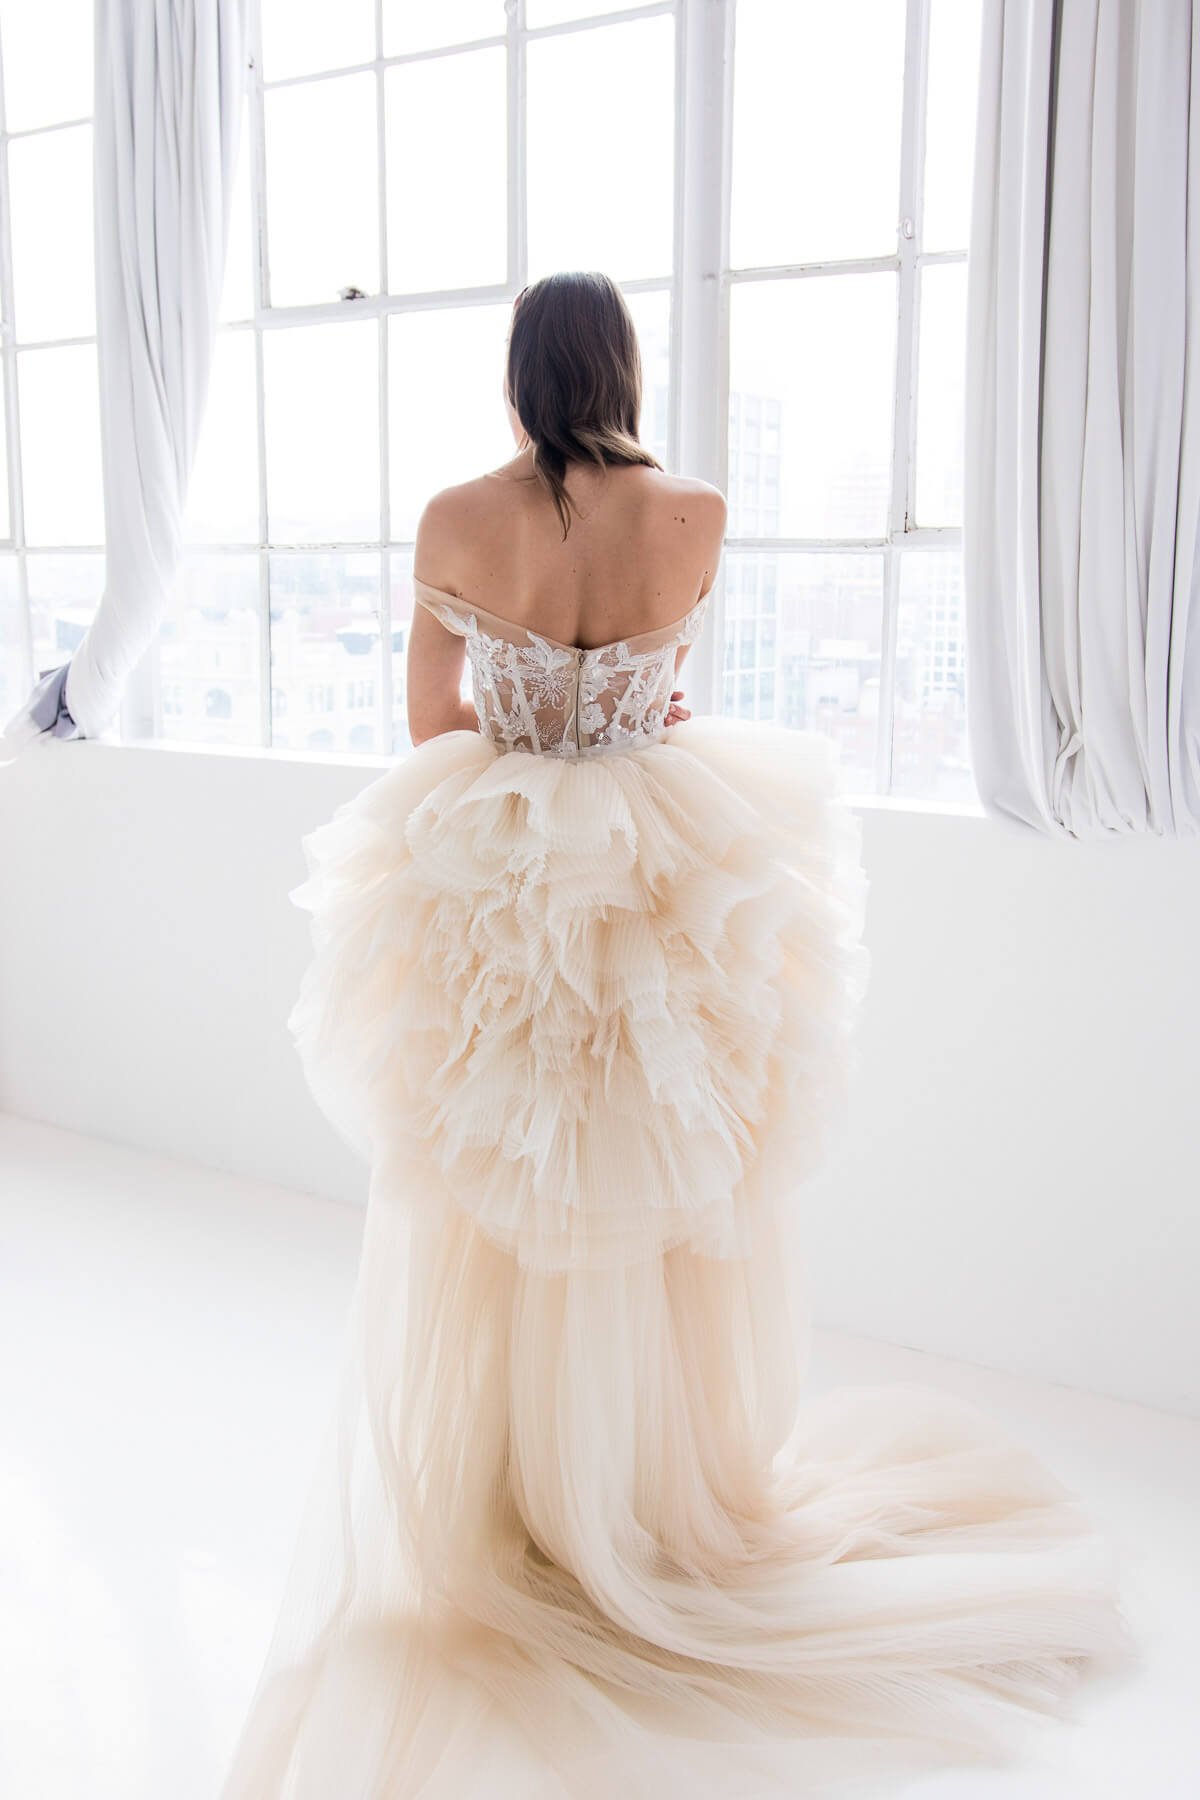 Morgan Newsom Galia Lahav wedding dress designer New York photographer-0778.jpg